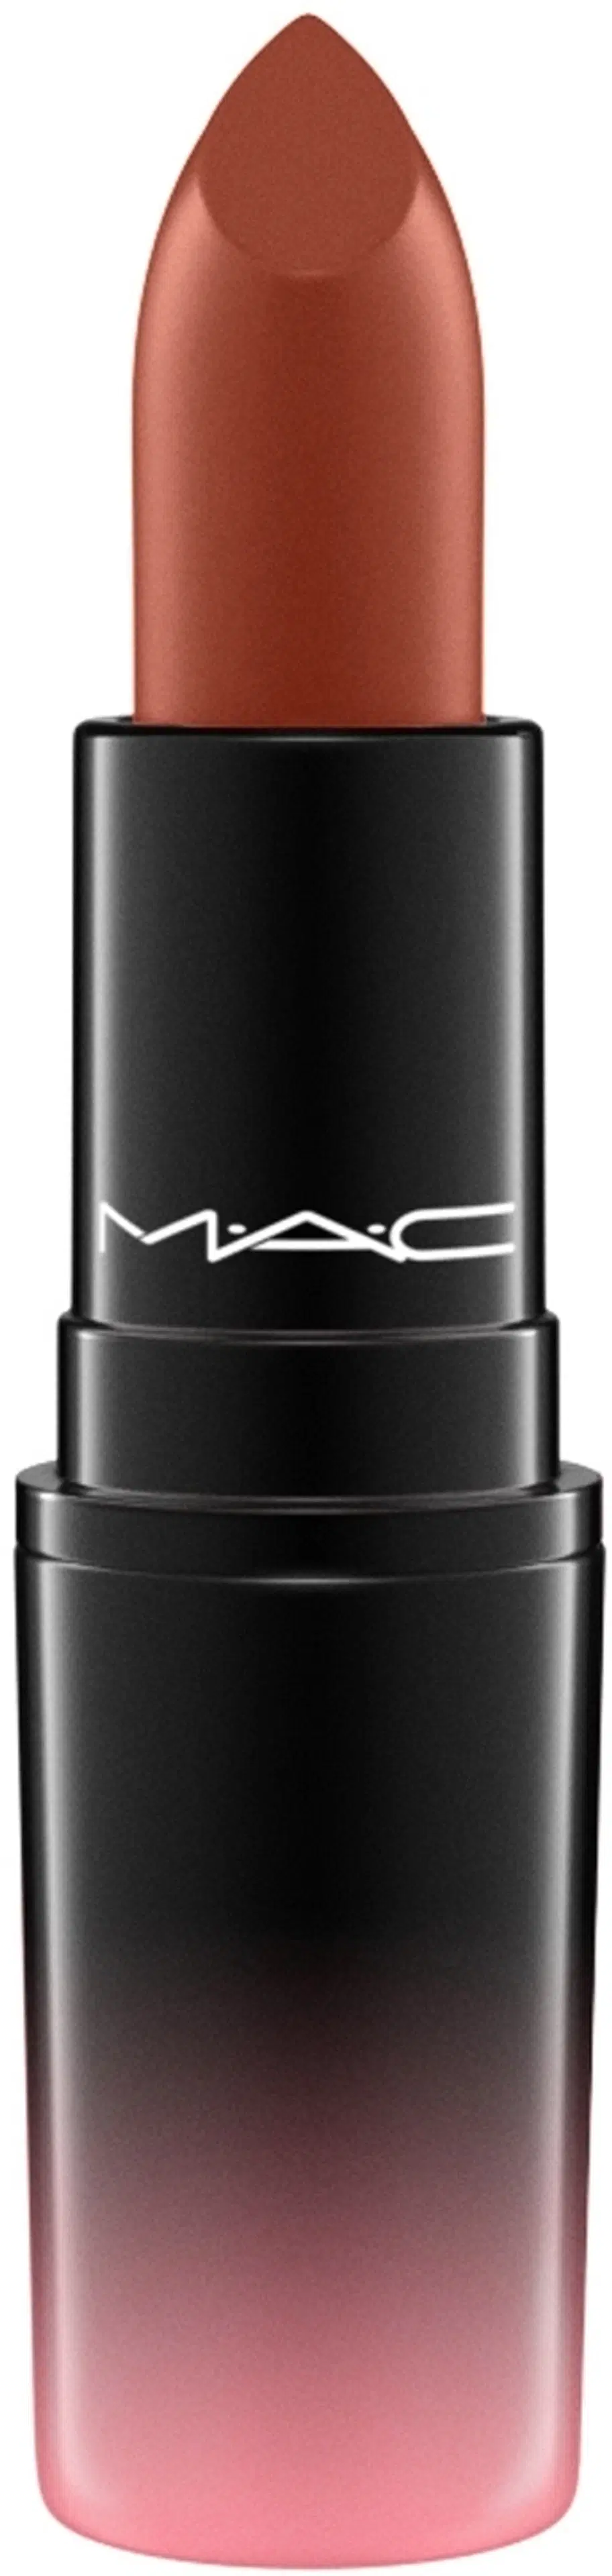 MAC Love Me Lipstick huulipuna 3g